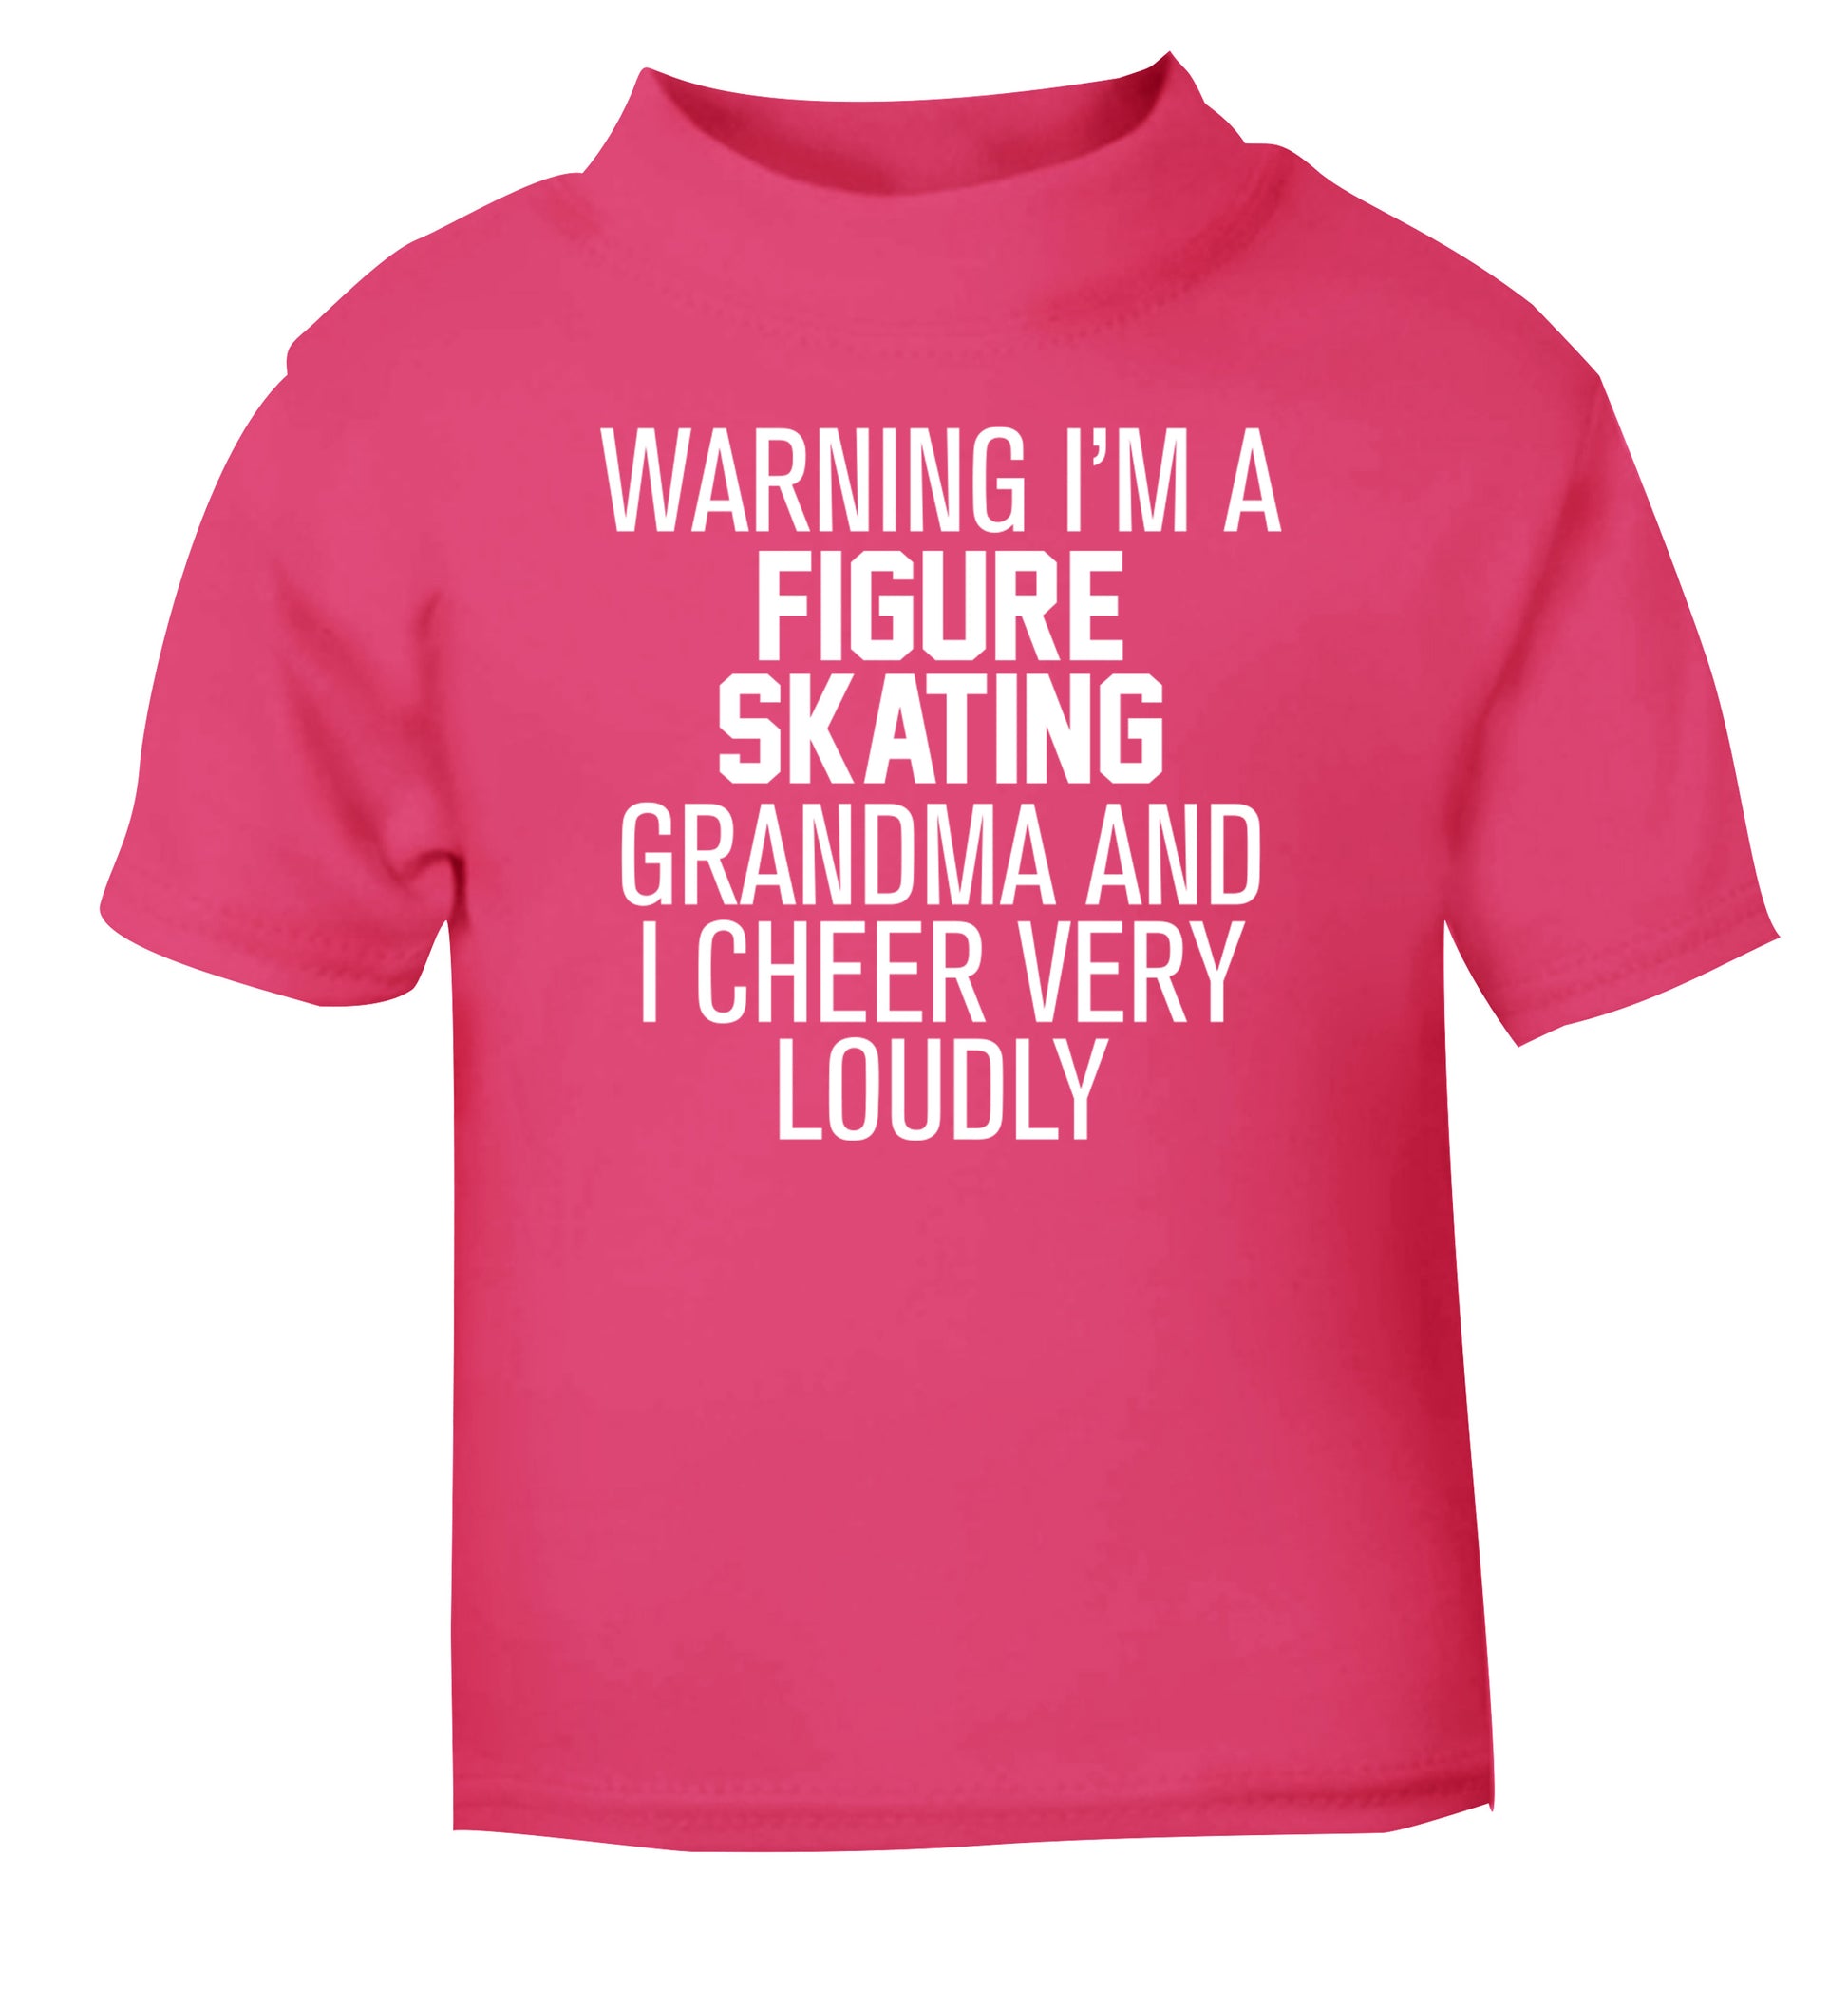 Warning I'm a figure skating grandma and I cheer very loudly pink Baby Toddler Tshirt 2 Years